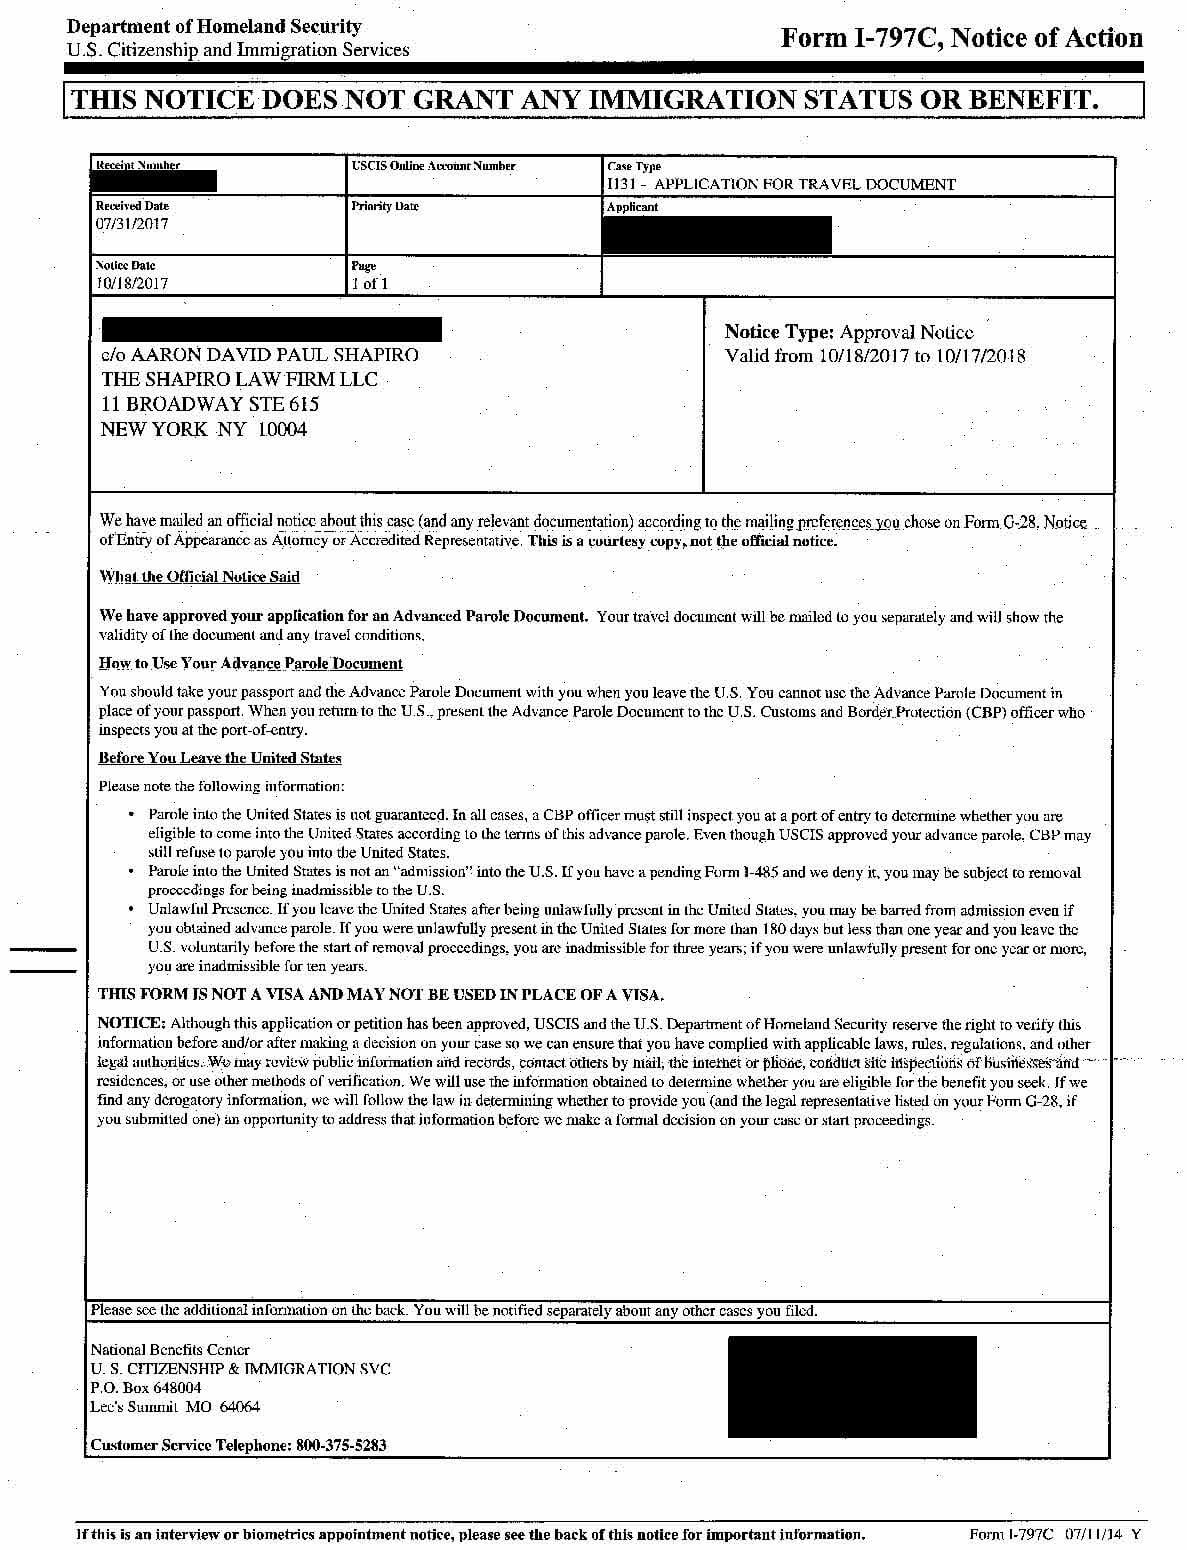 Form I-797C, I-131 Approval Notice